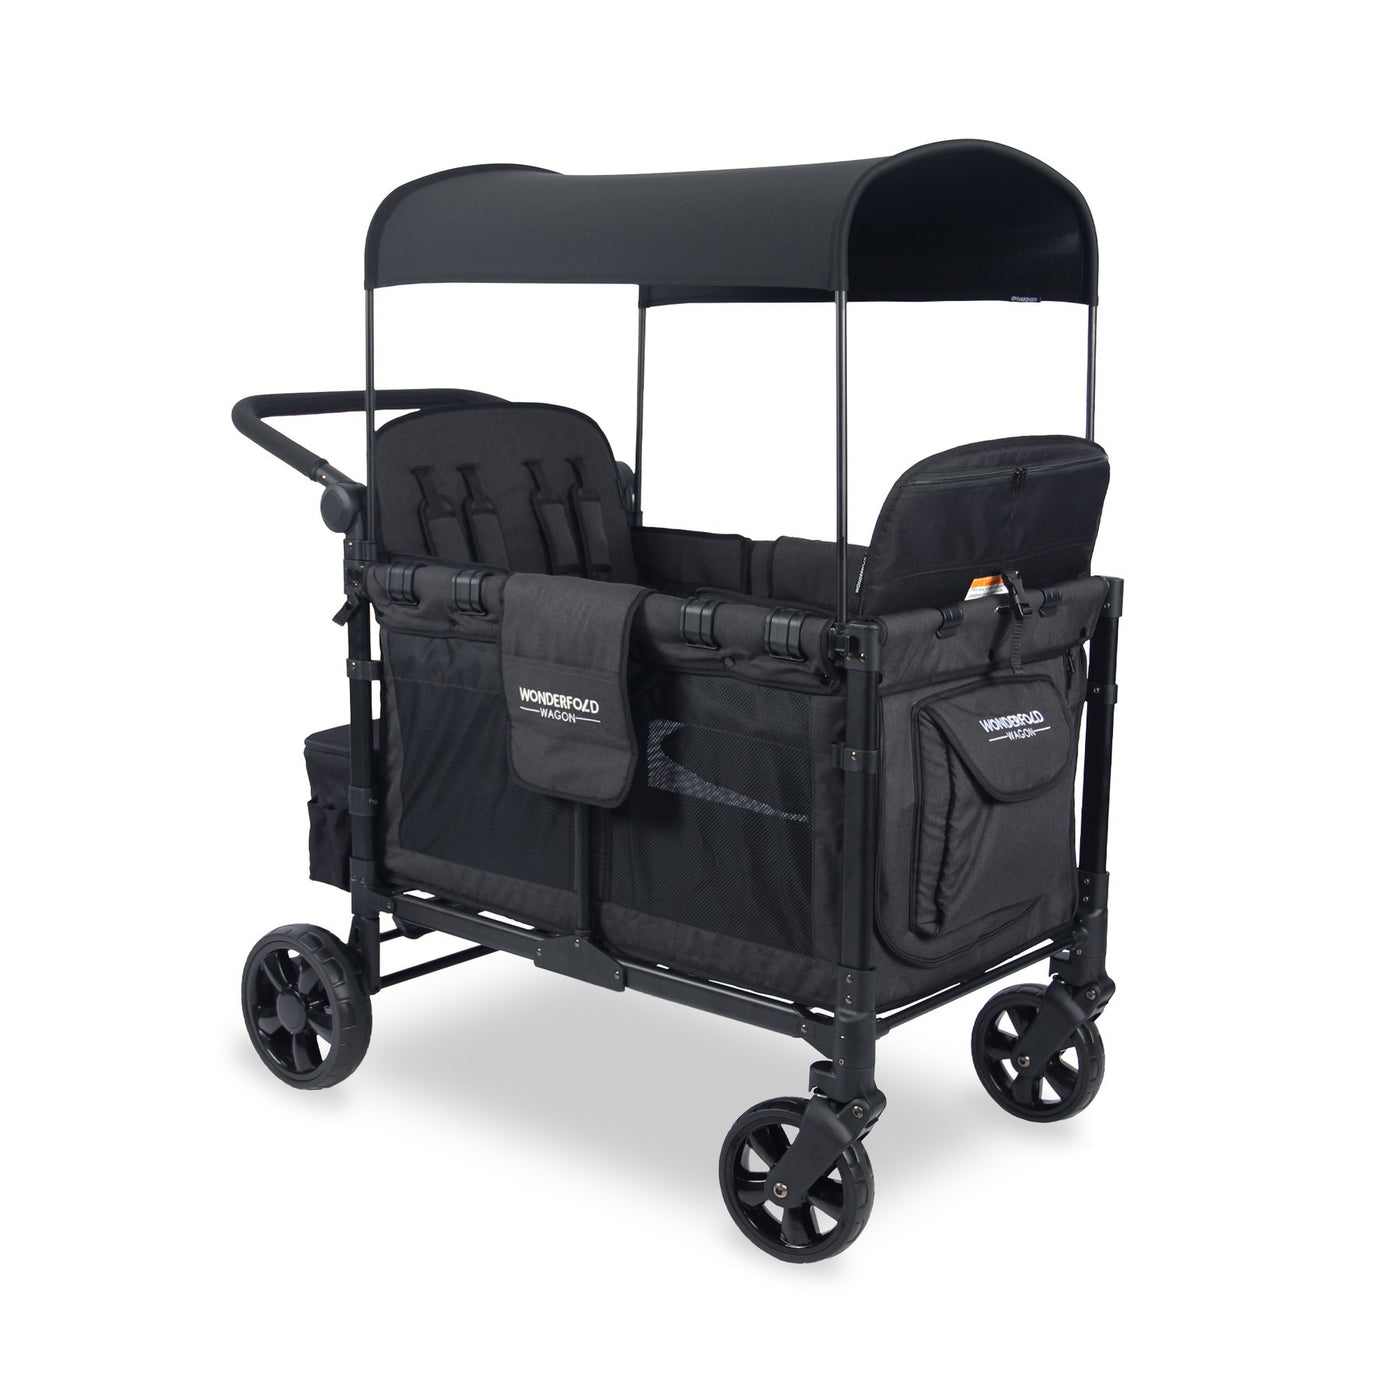 Wonderfold Wagon W4 Elite Quad Stroller Wagon (4 Seater)